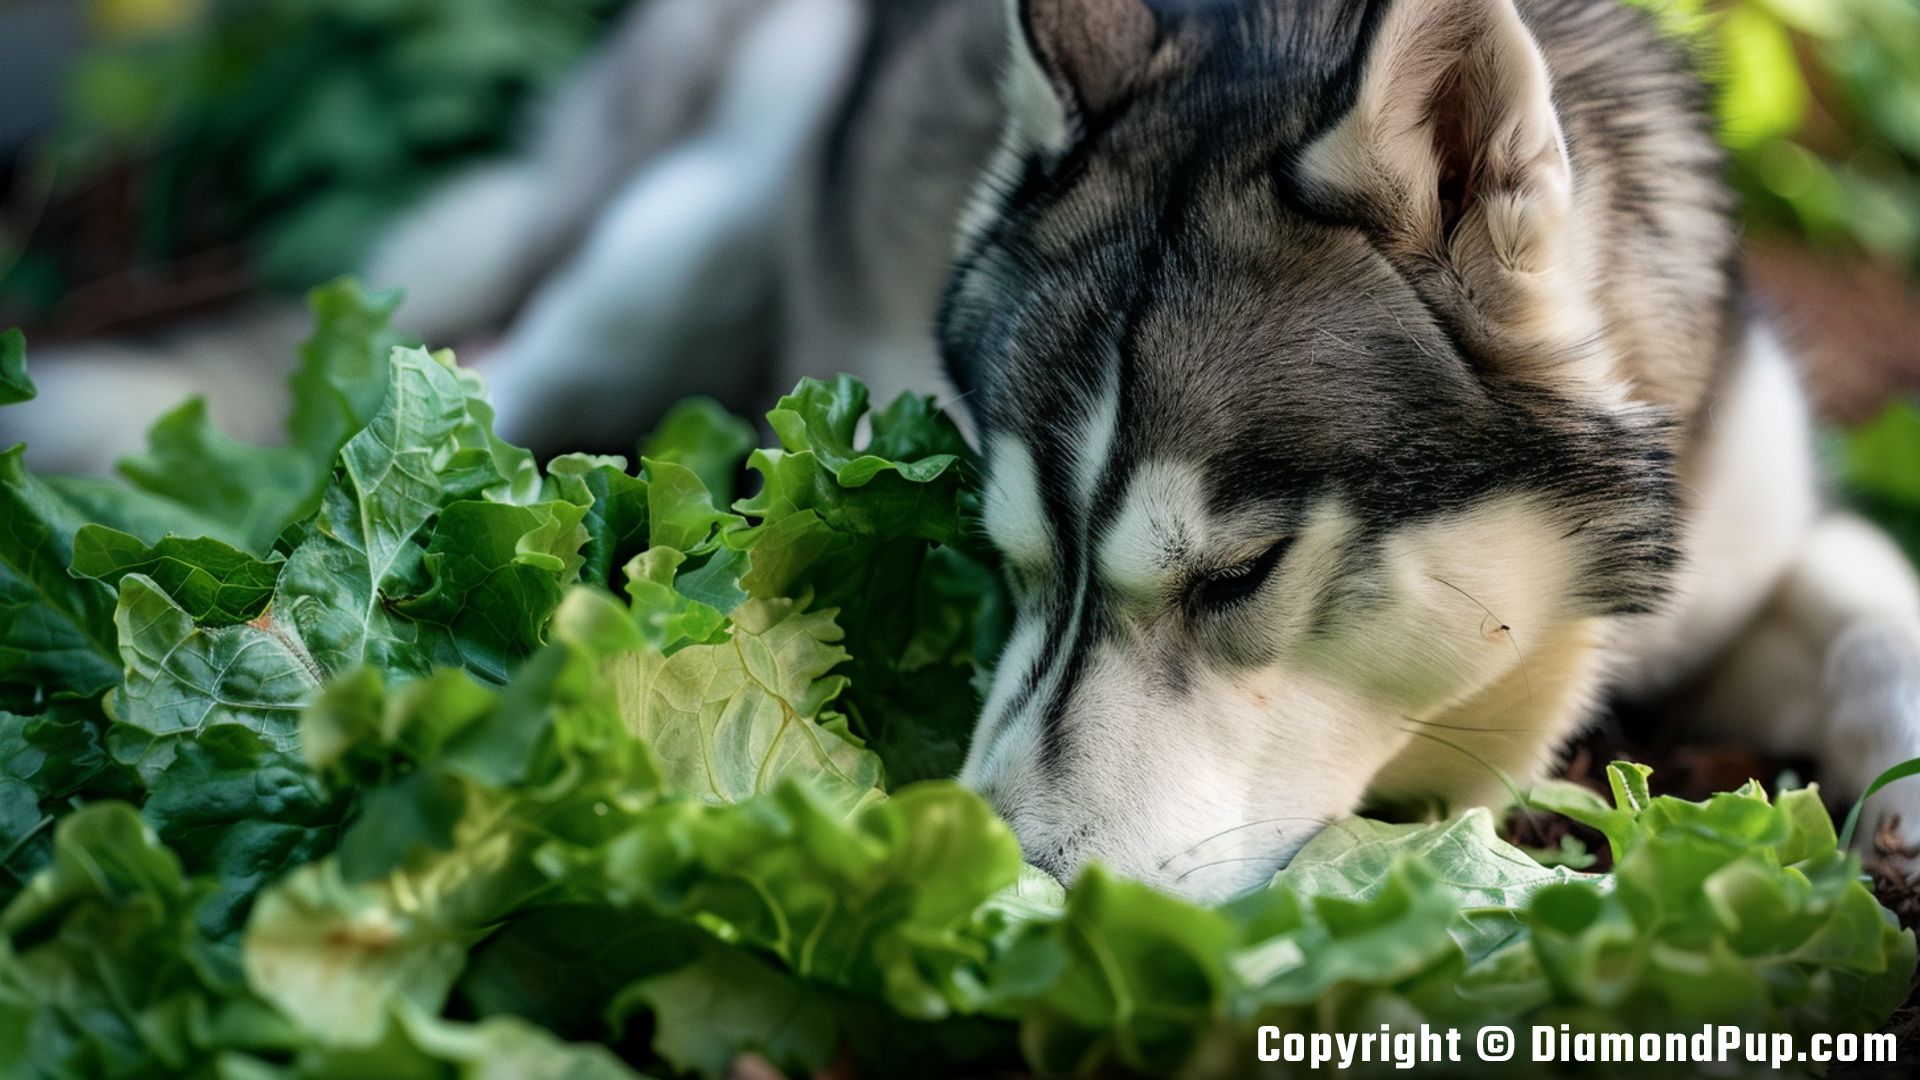 Image of a Playful Husky Snacking on Lettuce